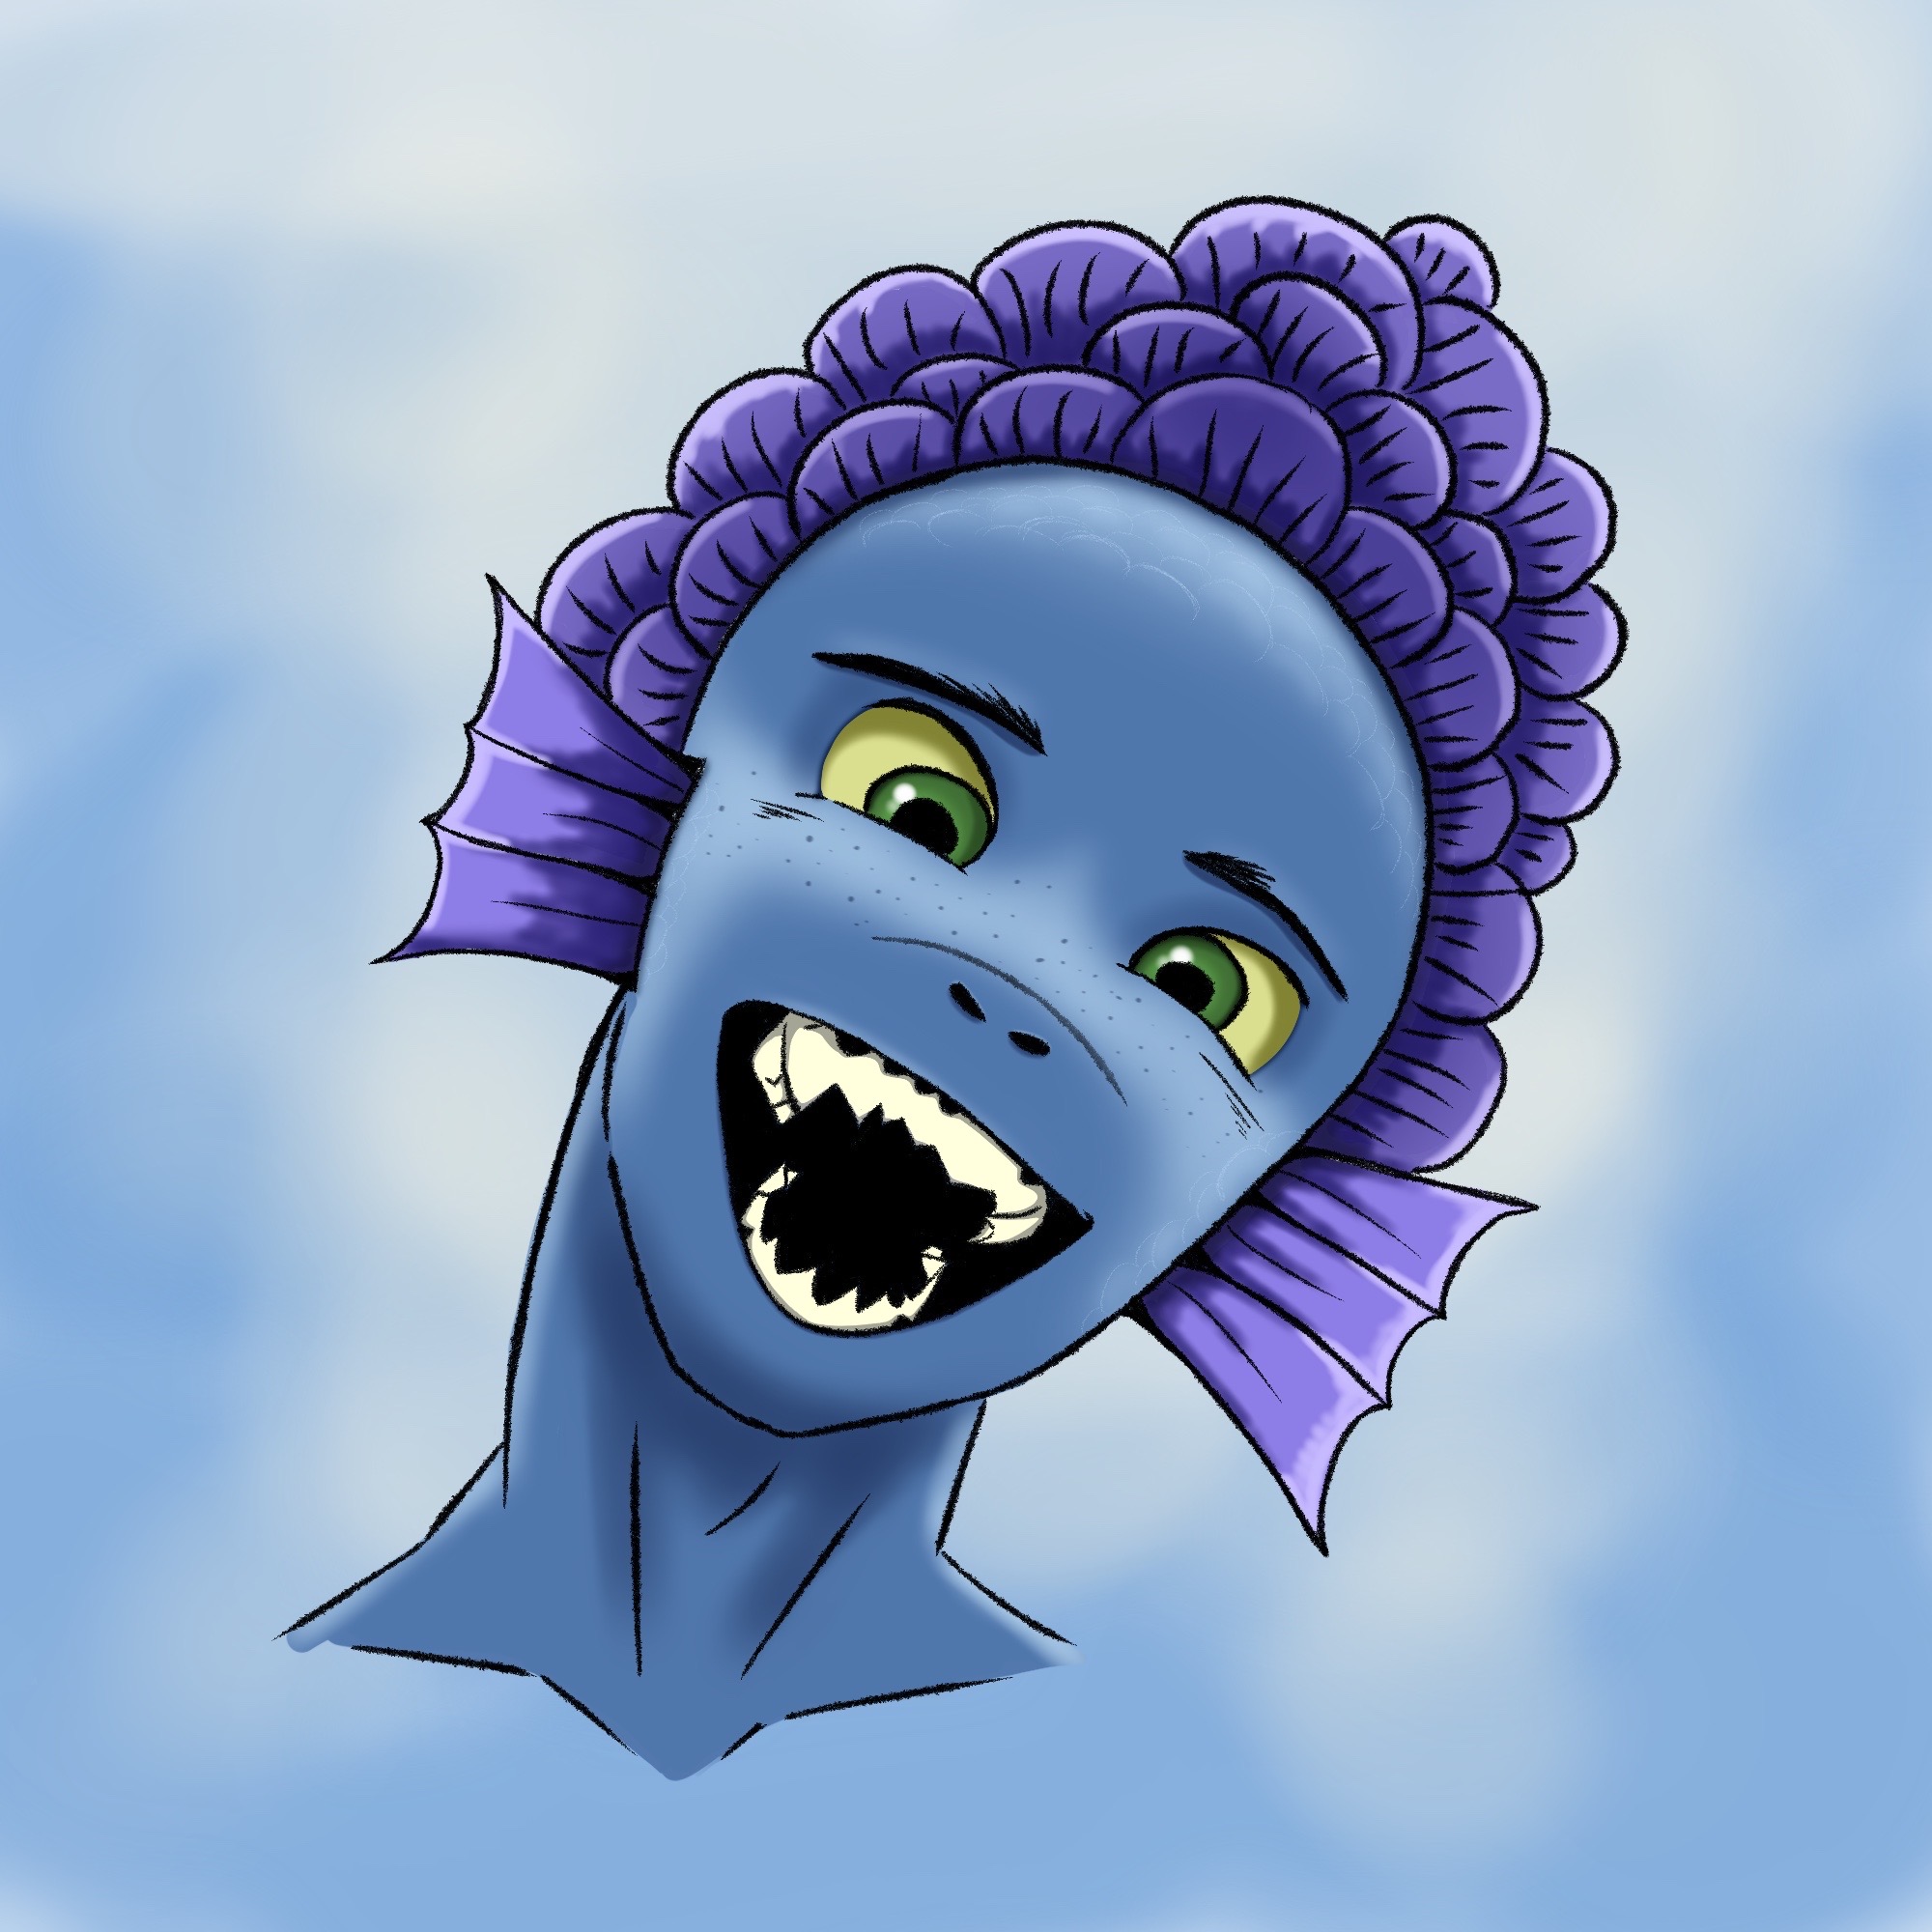 Alberto the Sea Monster by pbajnoci on DeviantArt